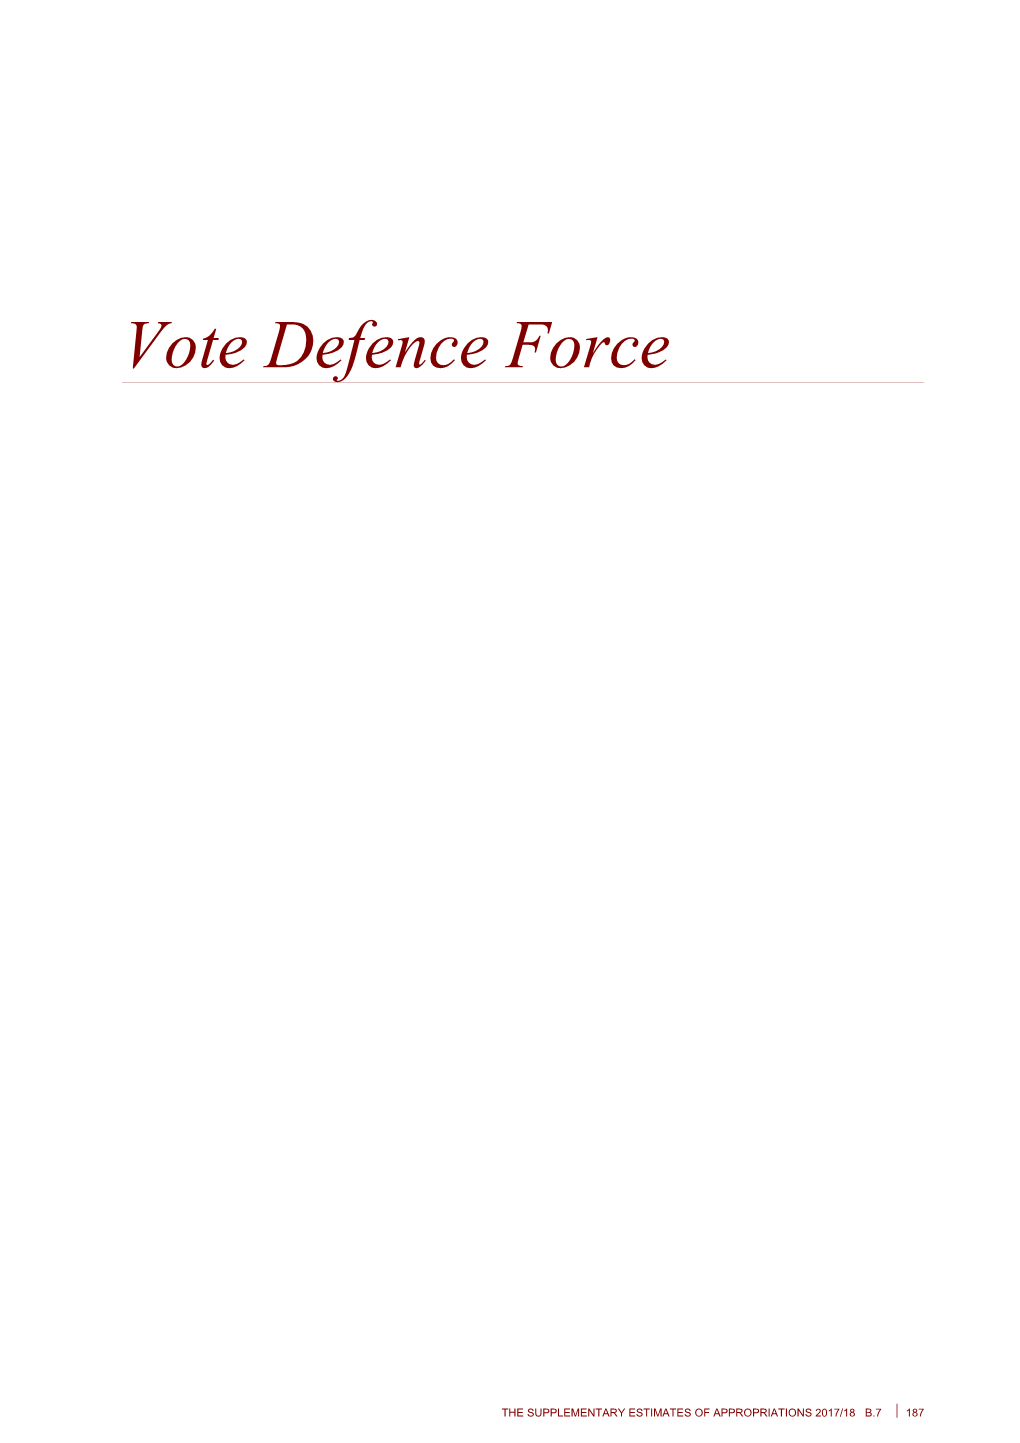 Vote Defence Force - Supplementary Estimates 2017/18 - Budget 2018